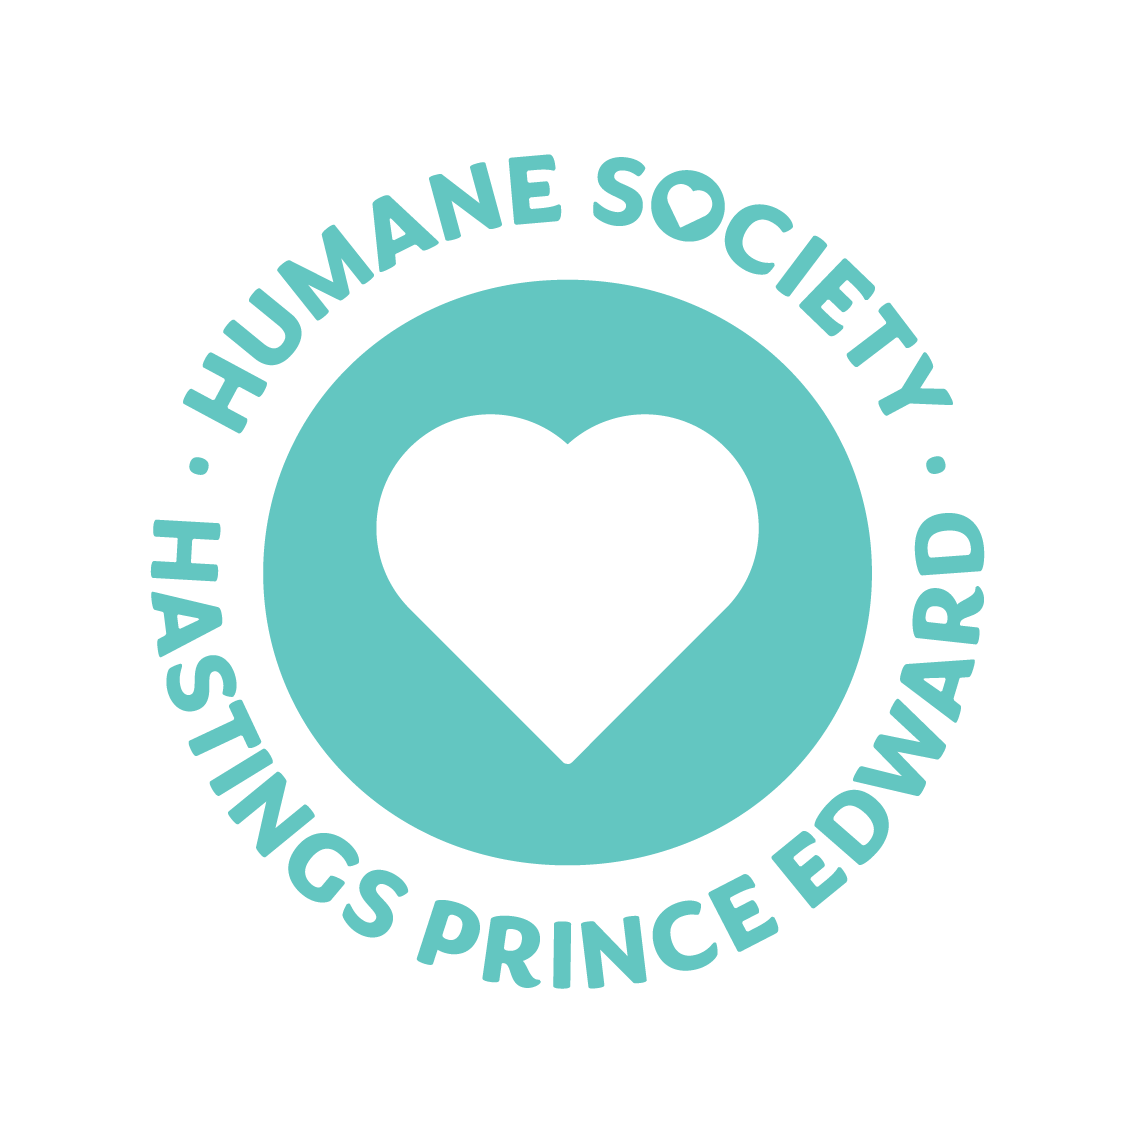 Humane Society Hastings Prince Edward